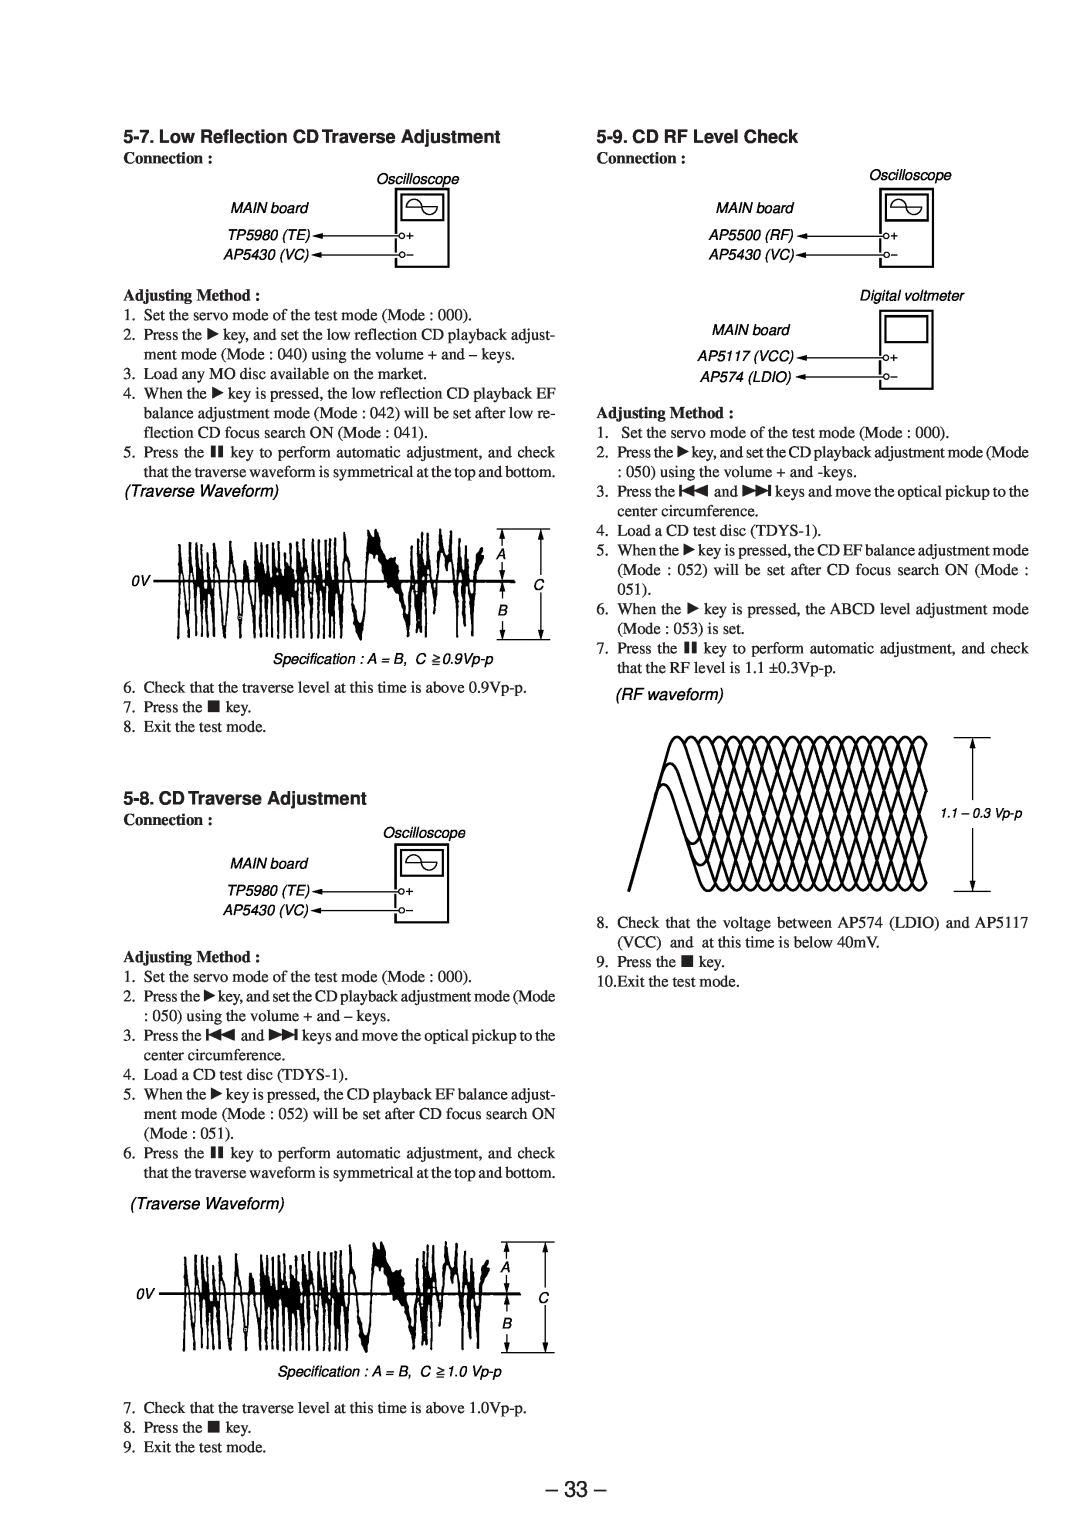 Sony MZ-R50 service manual Connection, Adjusting Method, Traverse Waveform, RF waveform 